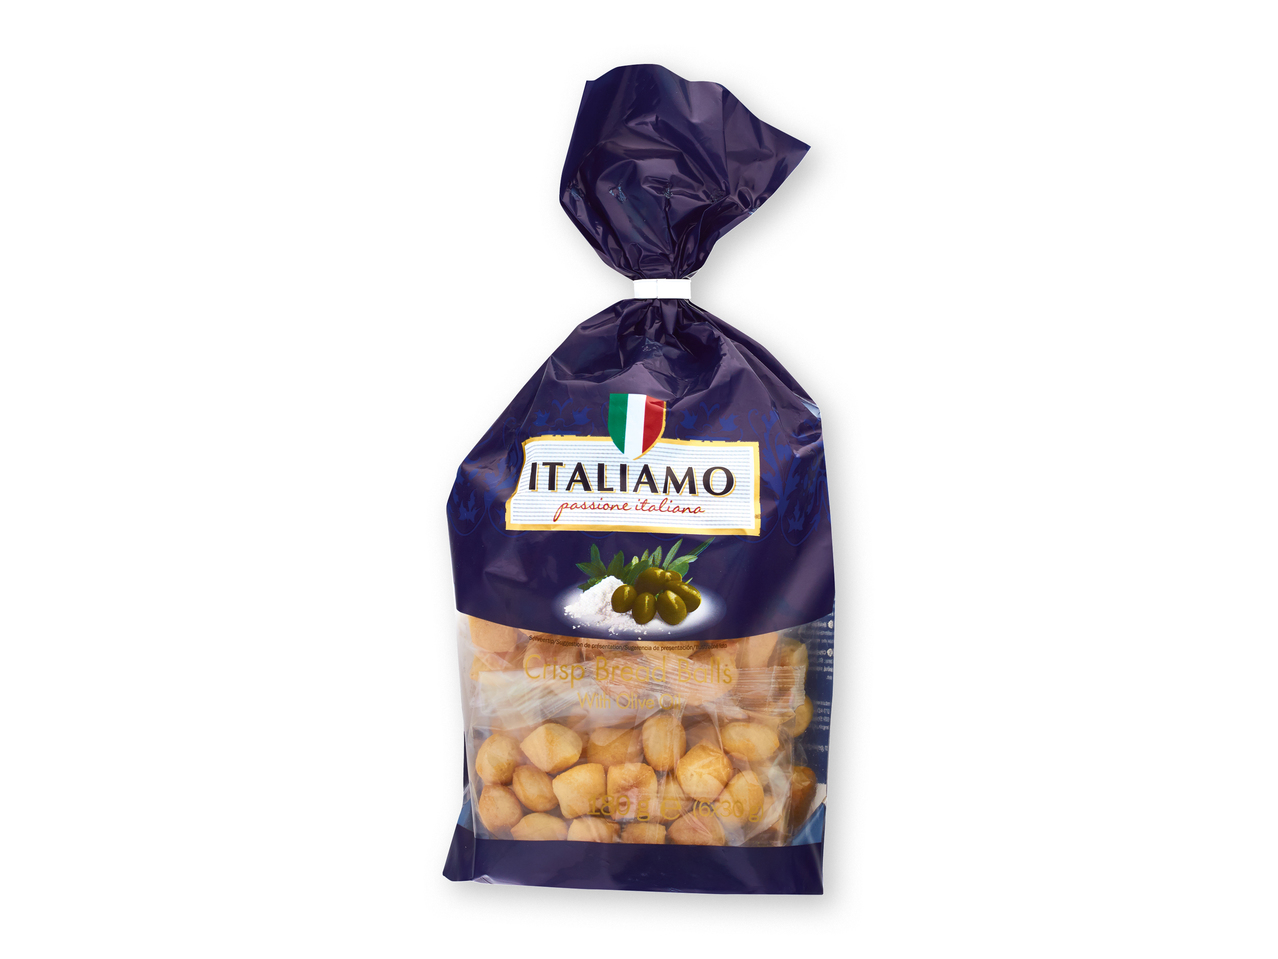 "ITALIAMO" Crispy nuggets